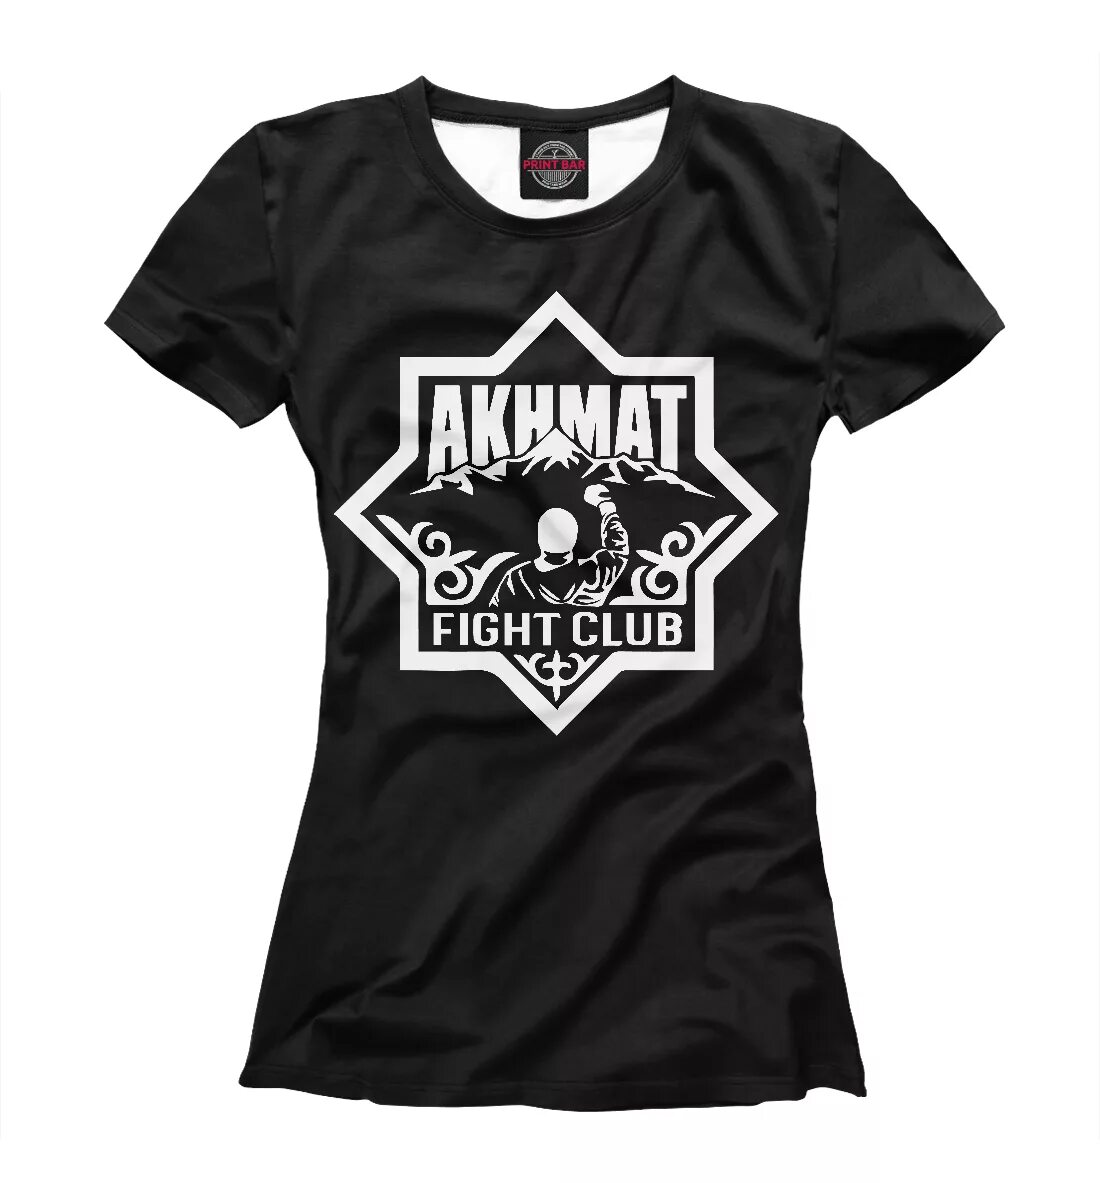 4 63 99. Akhmat Fight Club logo. Футболка ФК Ахмат. Футболка Ахмат тим. Футболка ММА Ахмат сила.